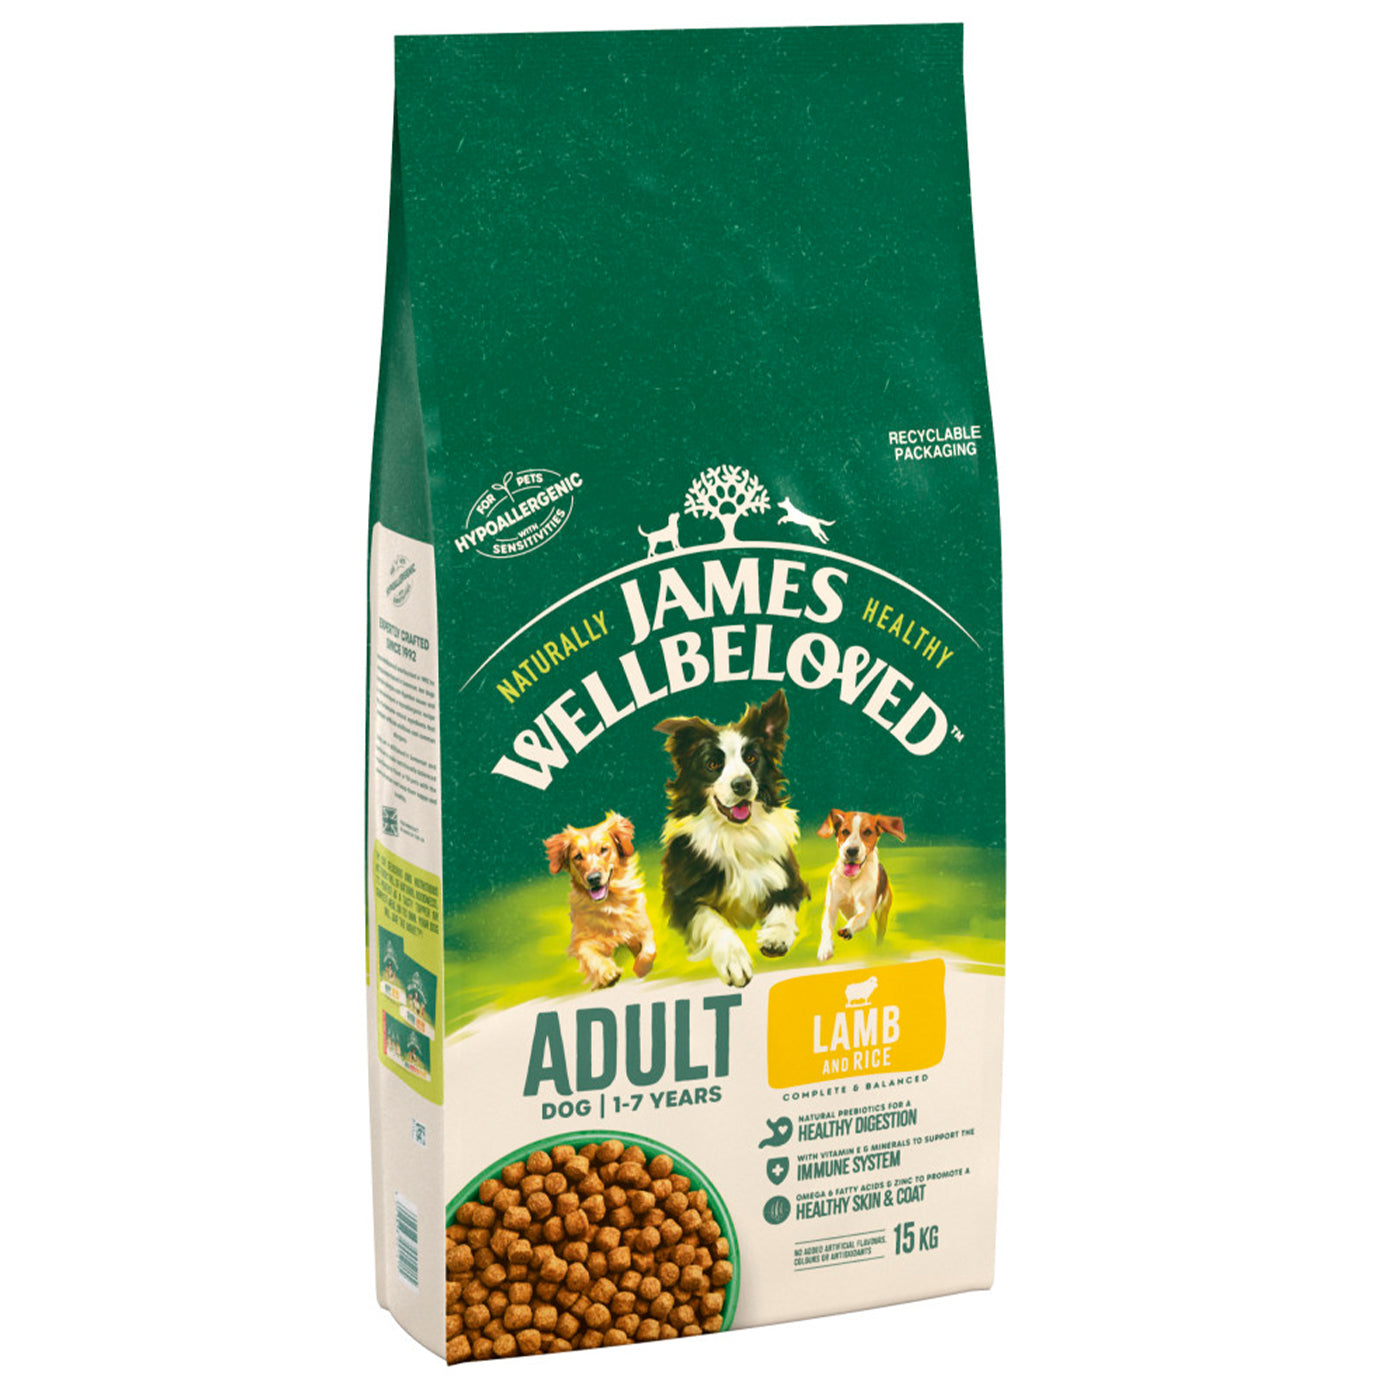 James Wellbeloved Lamb & Rice Adult Dog Food 15KG